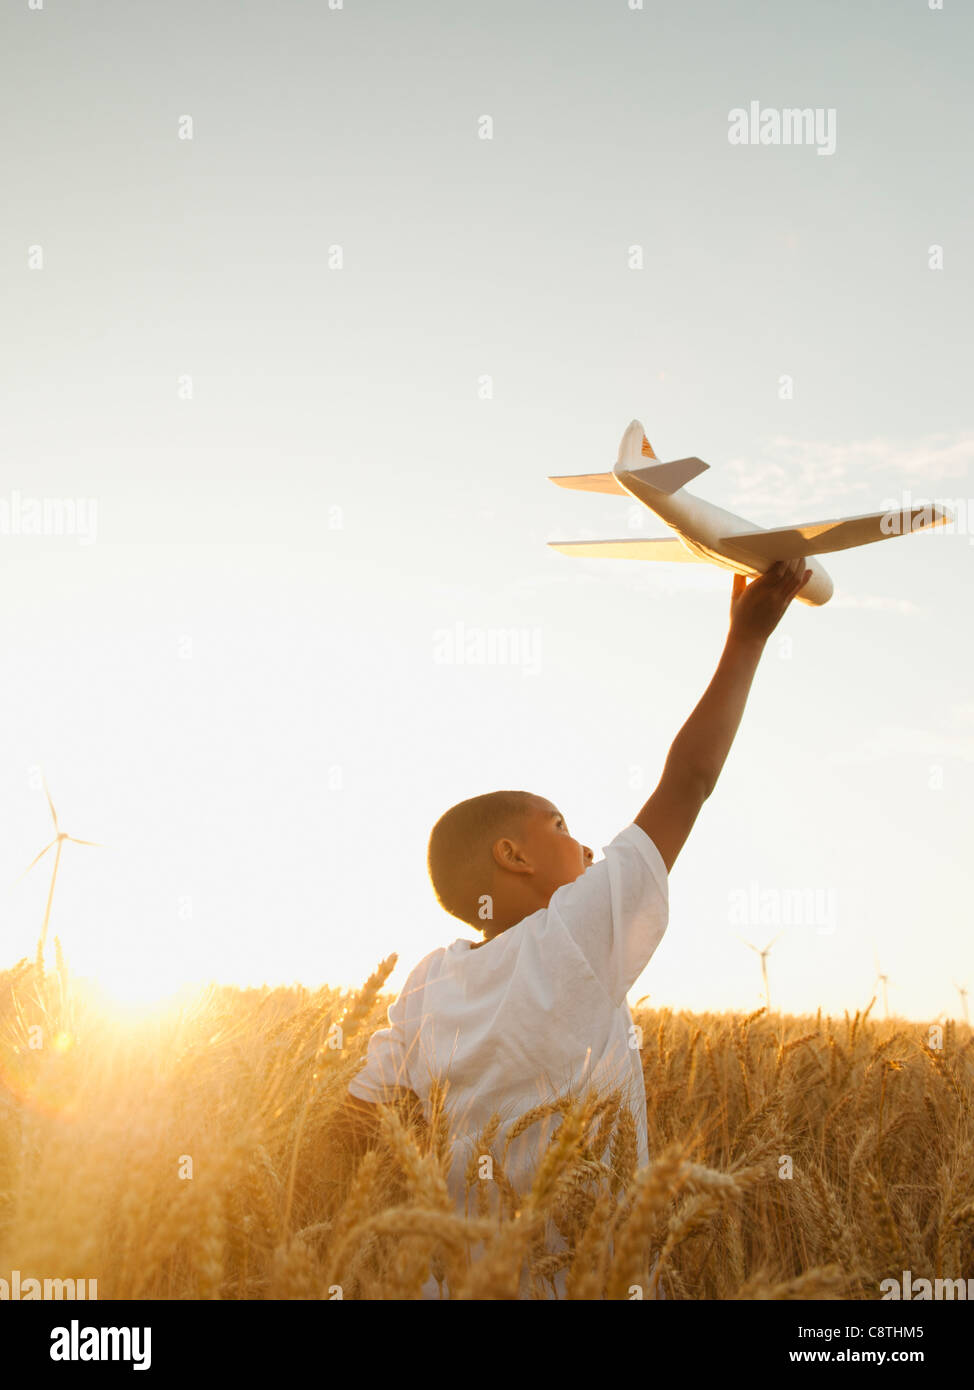 USA, Oregon, Wasco, junge spielt mit Spielzeug Flugzeug im Weizenfeld Stockfoto